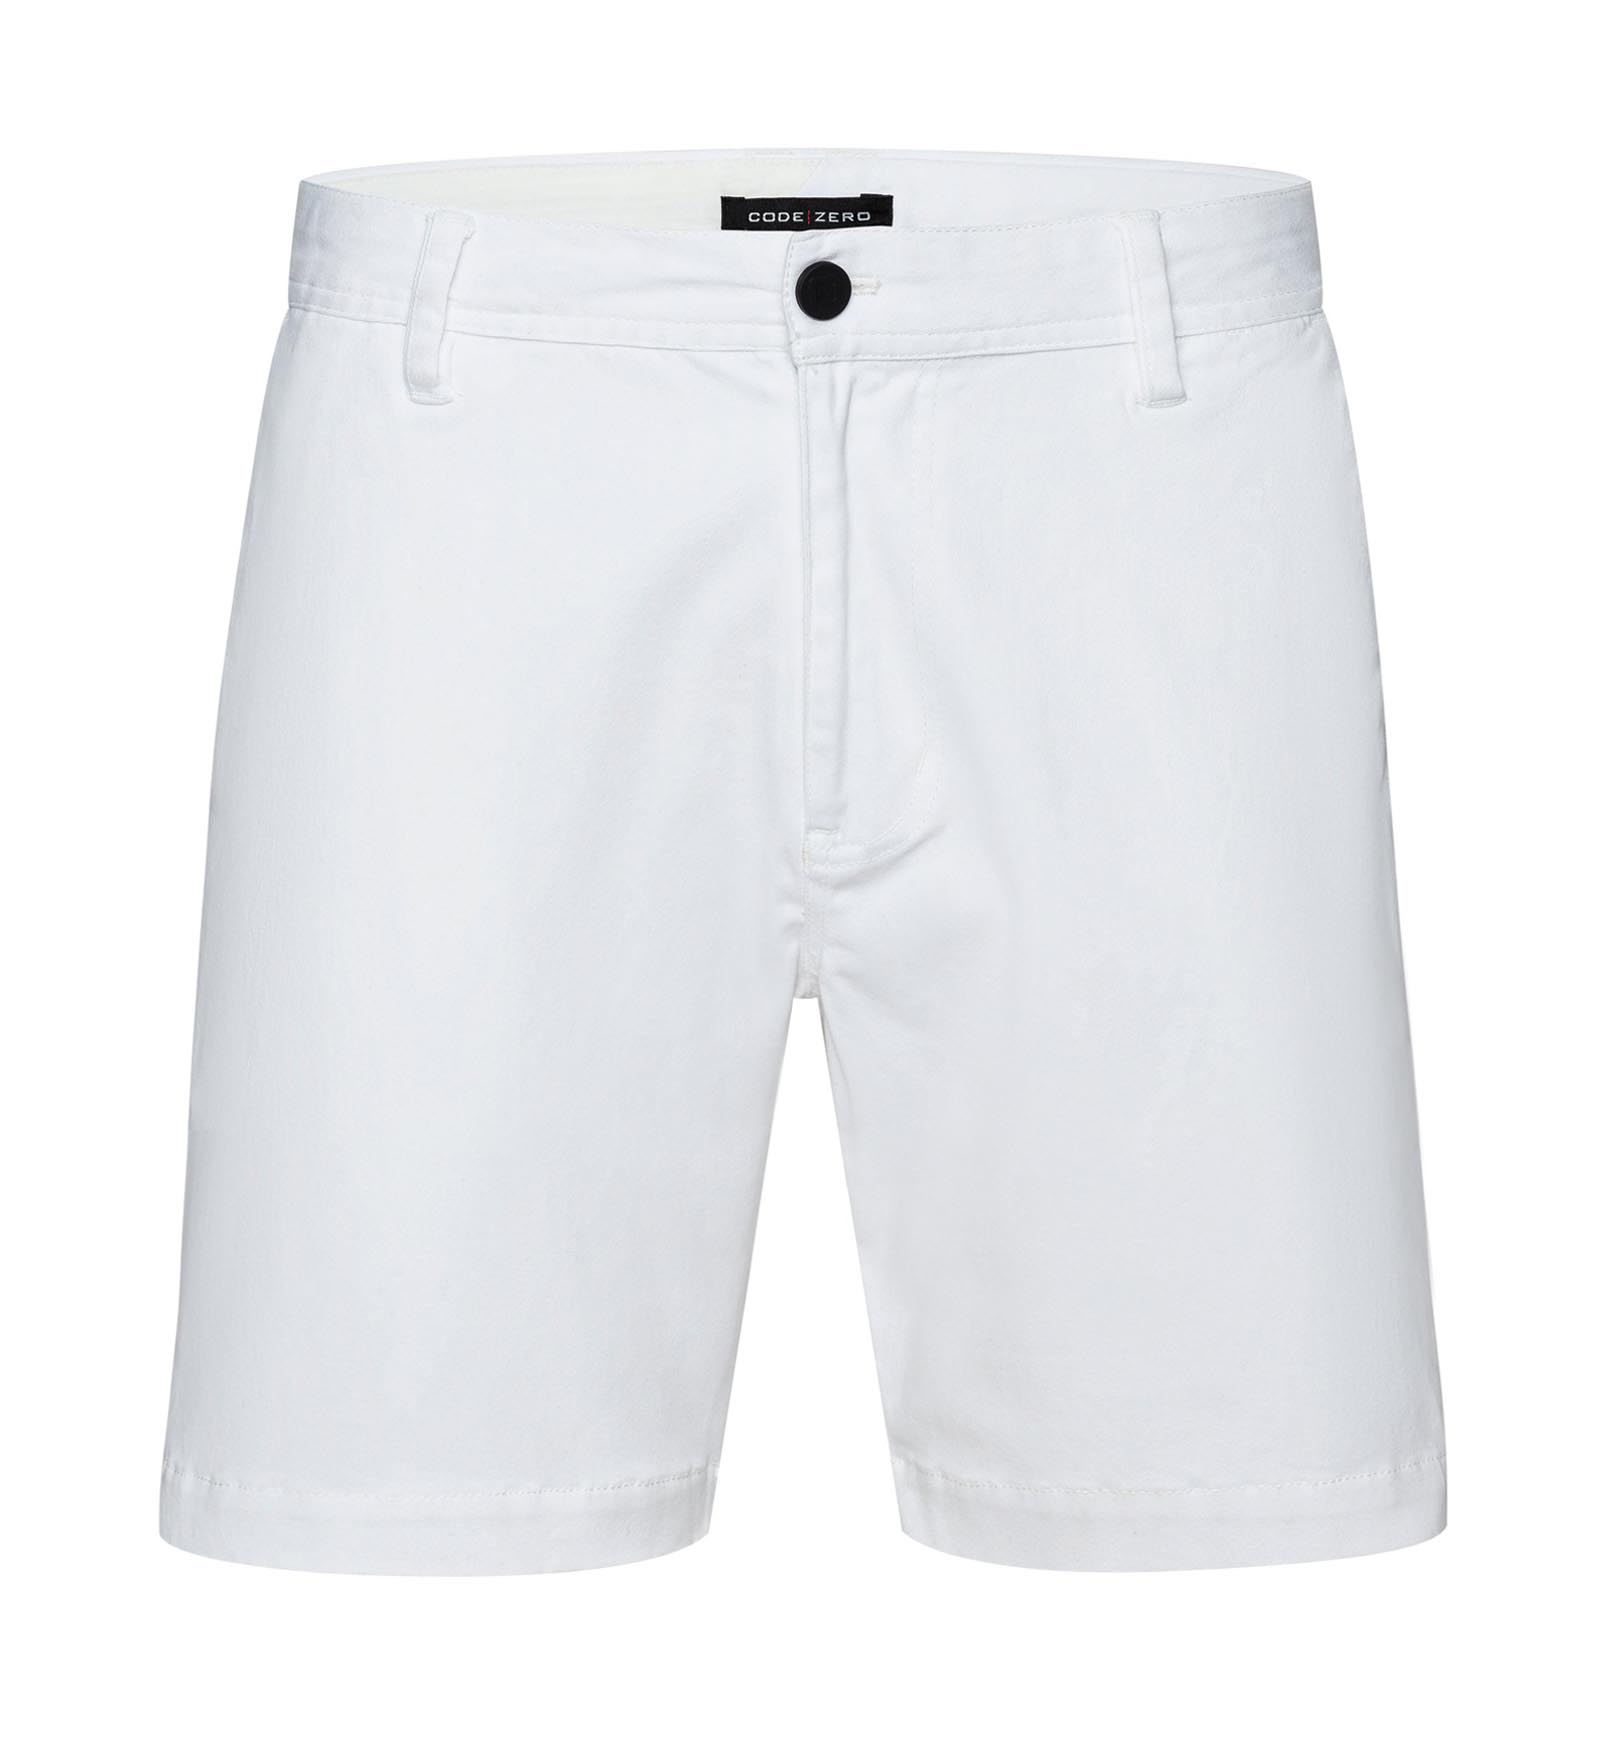 Shorts Men Classic White | CODE-ZERO Online